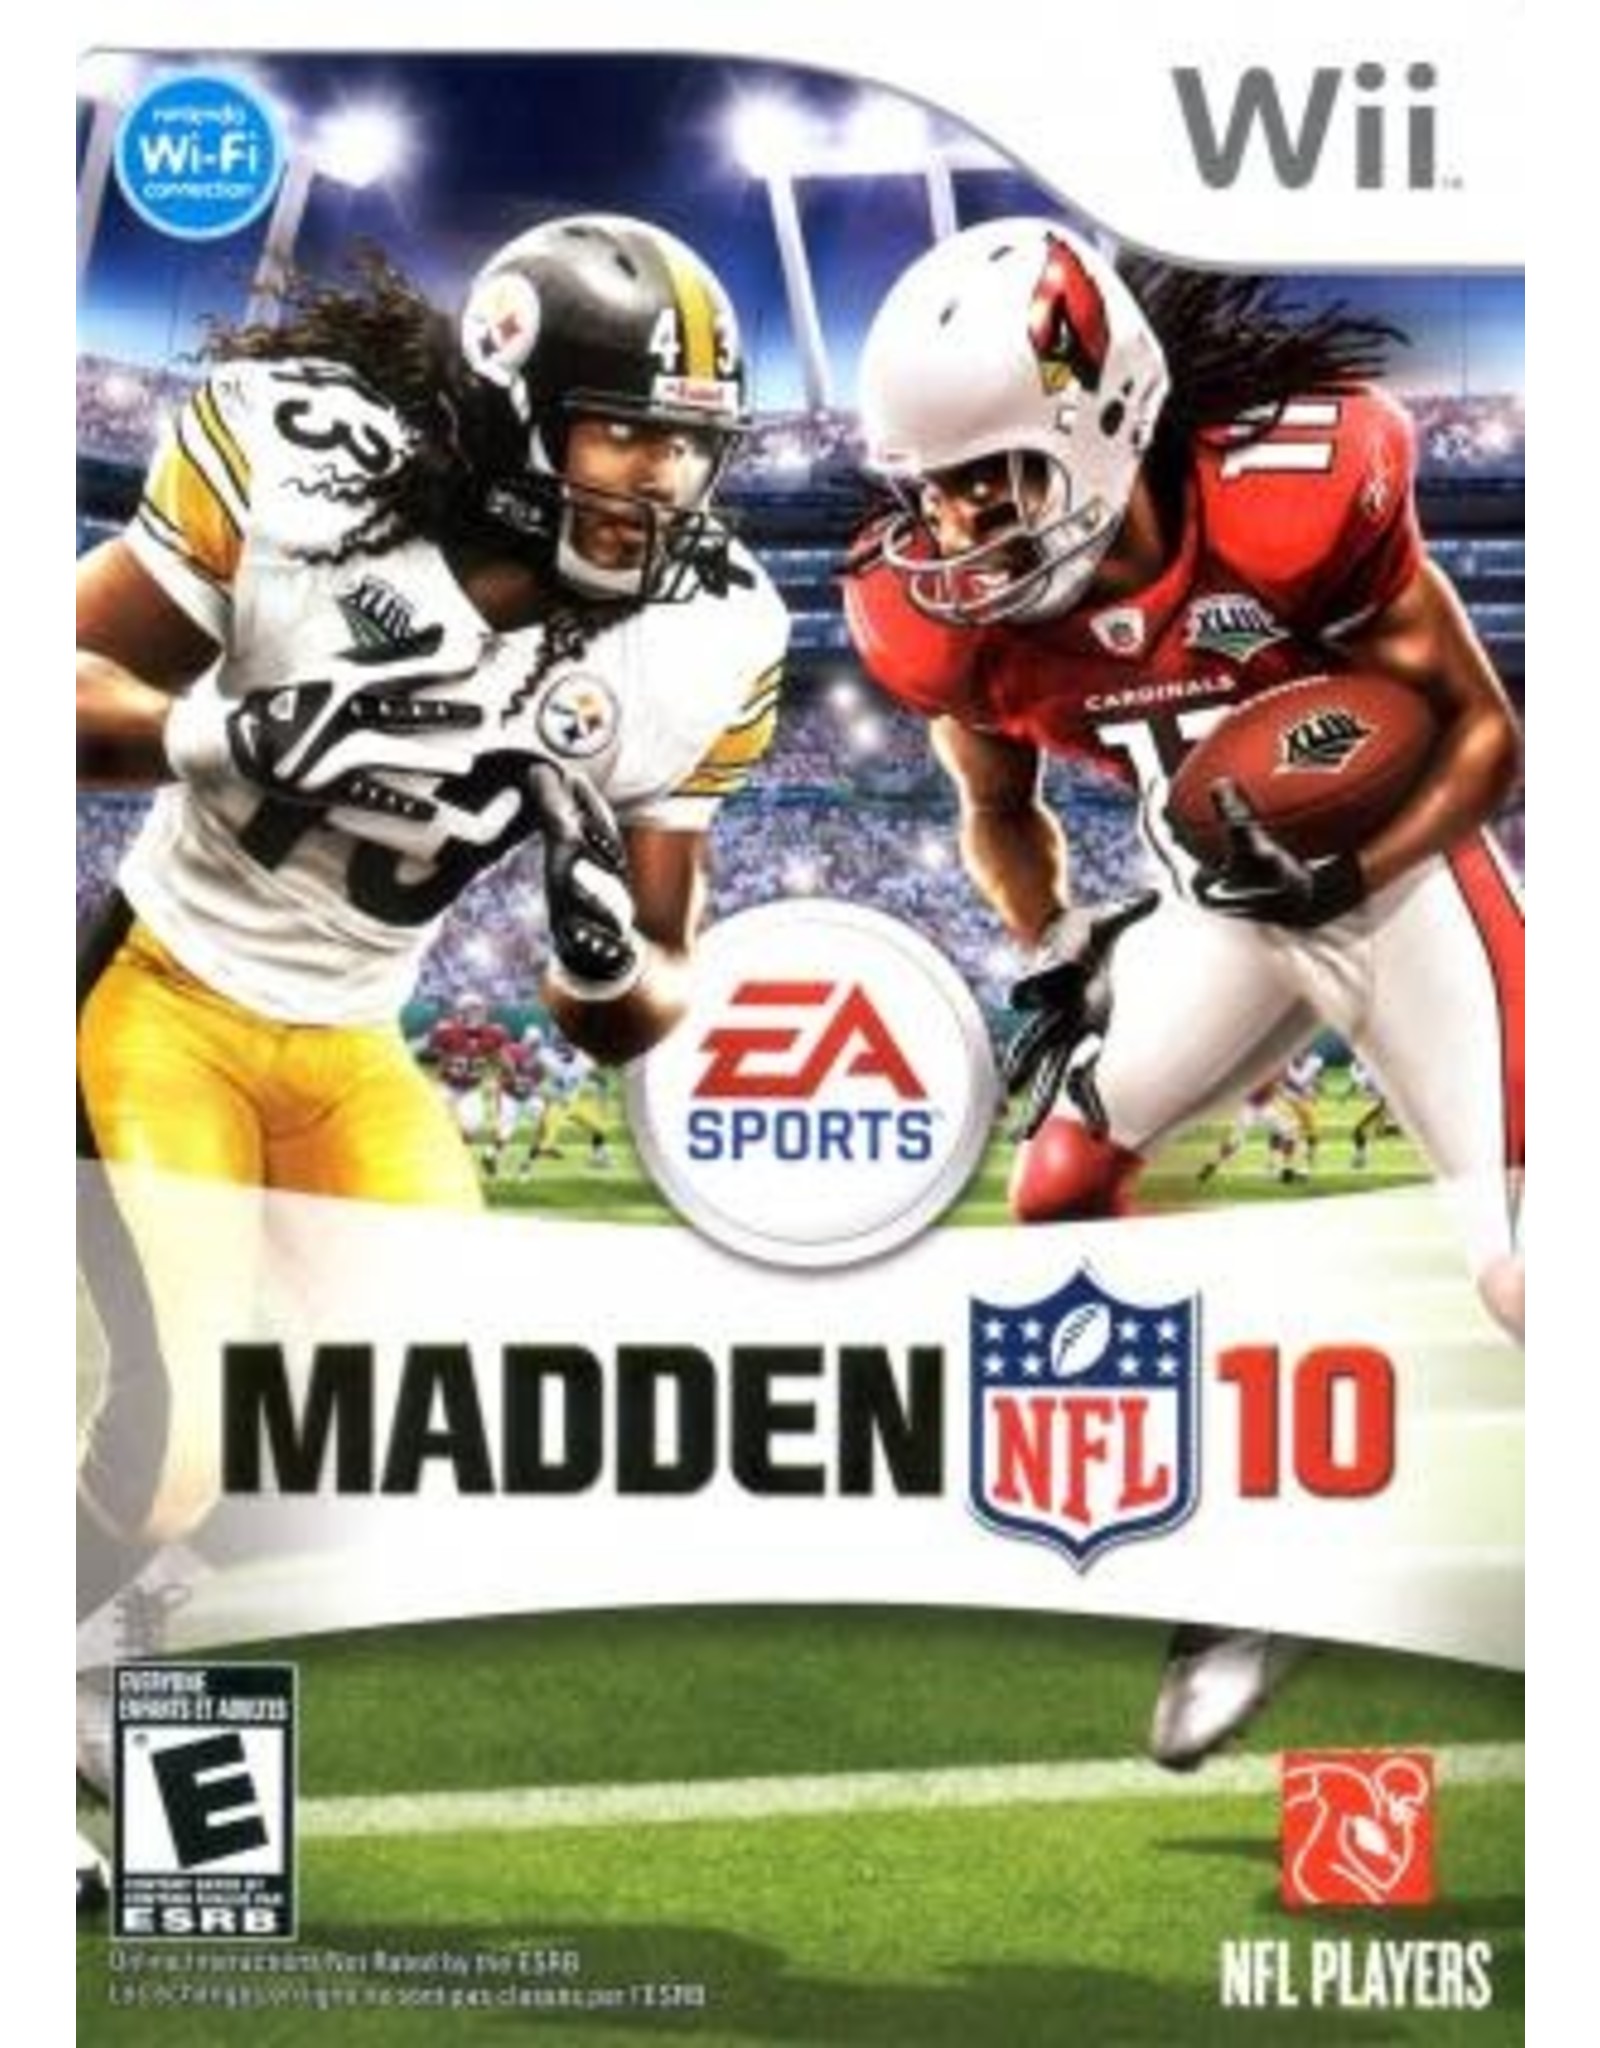 Wii Madden NFL 10 (CiB)